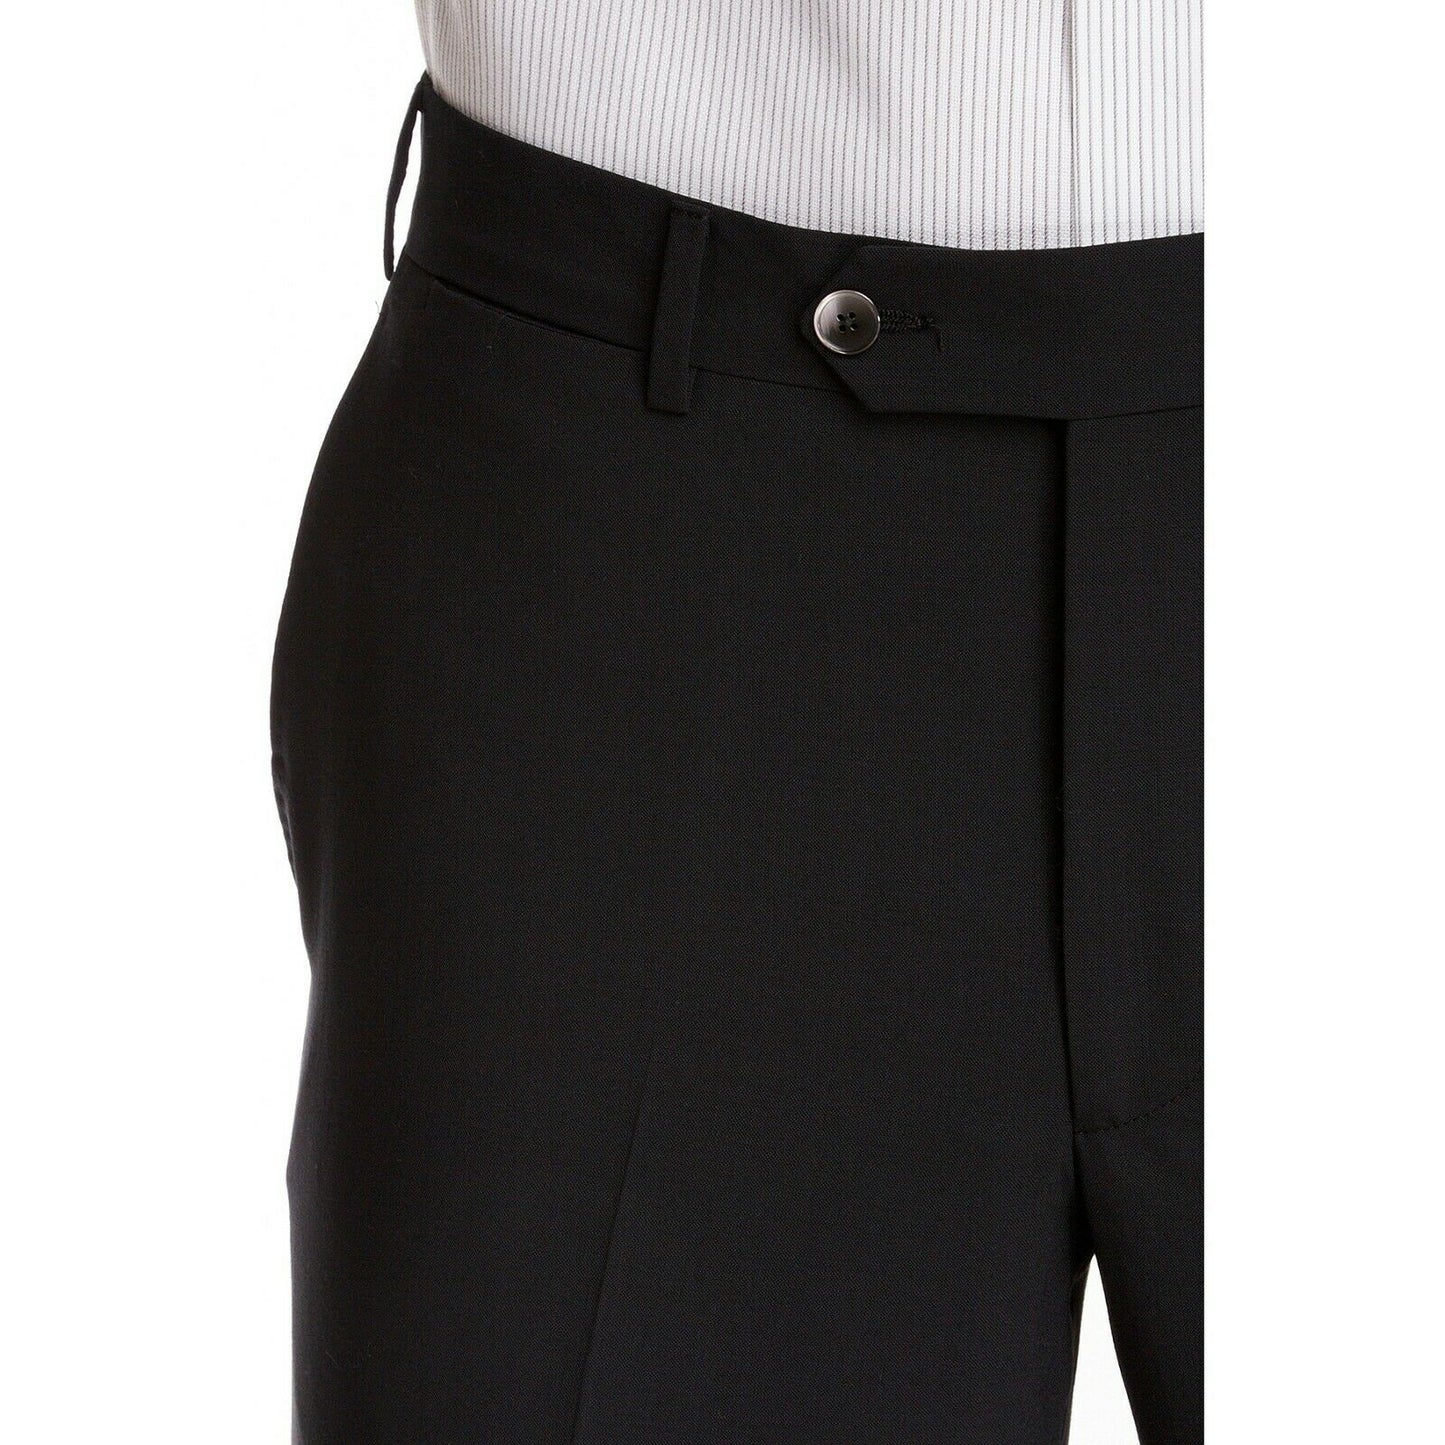 Ike Behar Mens Wool Flat Front Dress Suit Slacks Pants Black 32 NWT